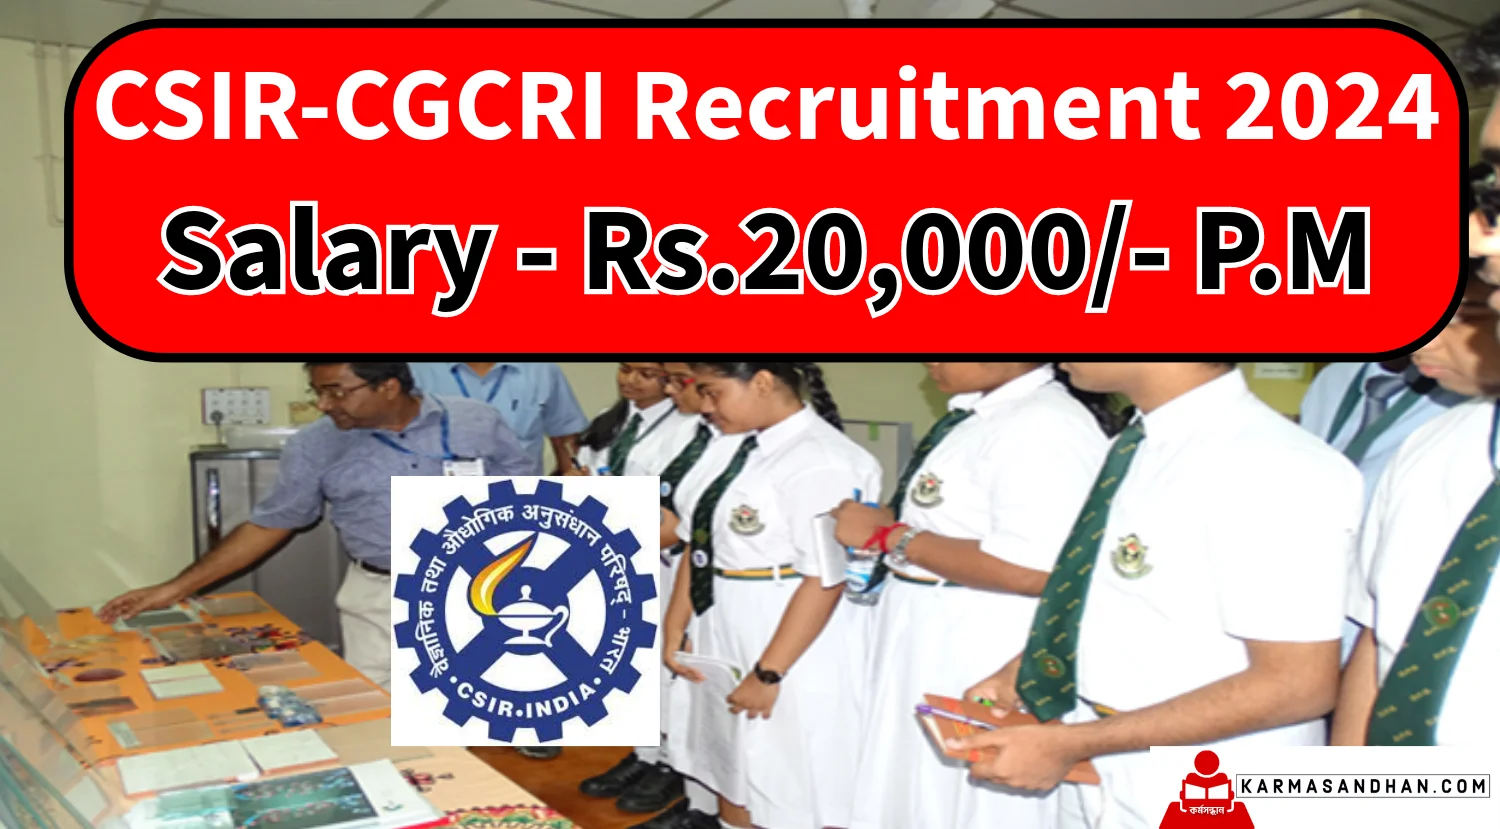 CSIR-CGCRI Recruitment 2024 Notification out